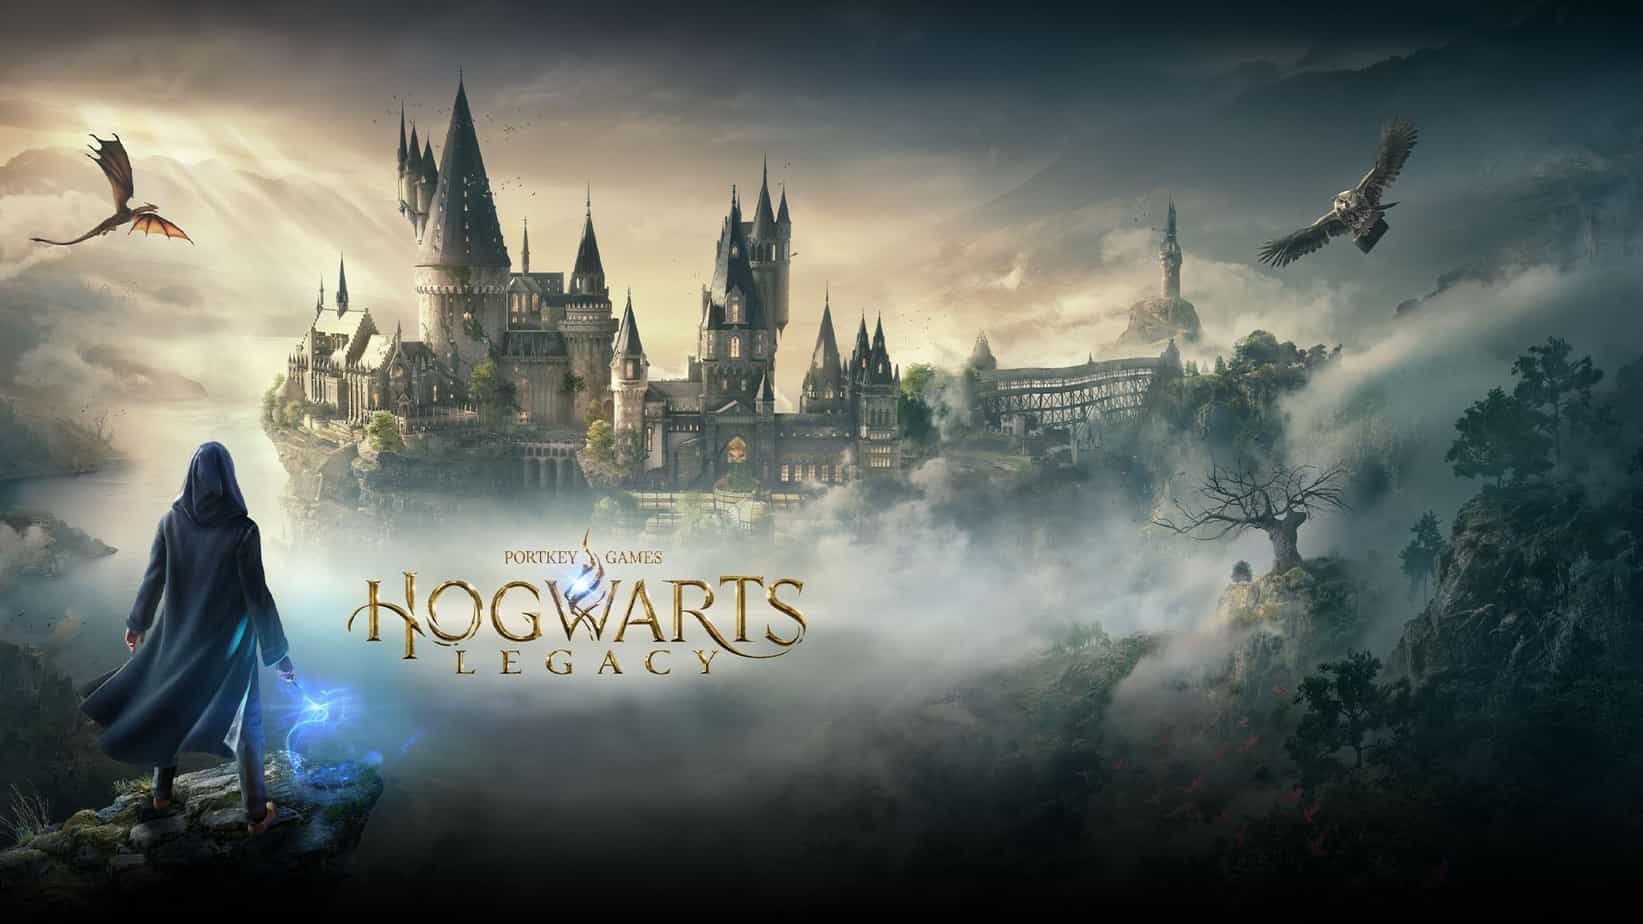 Hogwarts Legacy - Xbox Series X : Target